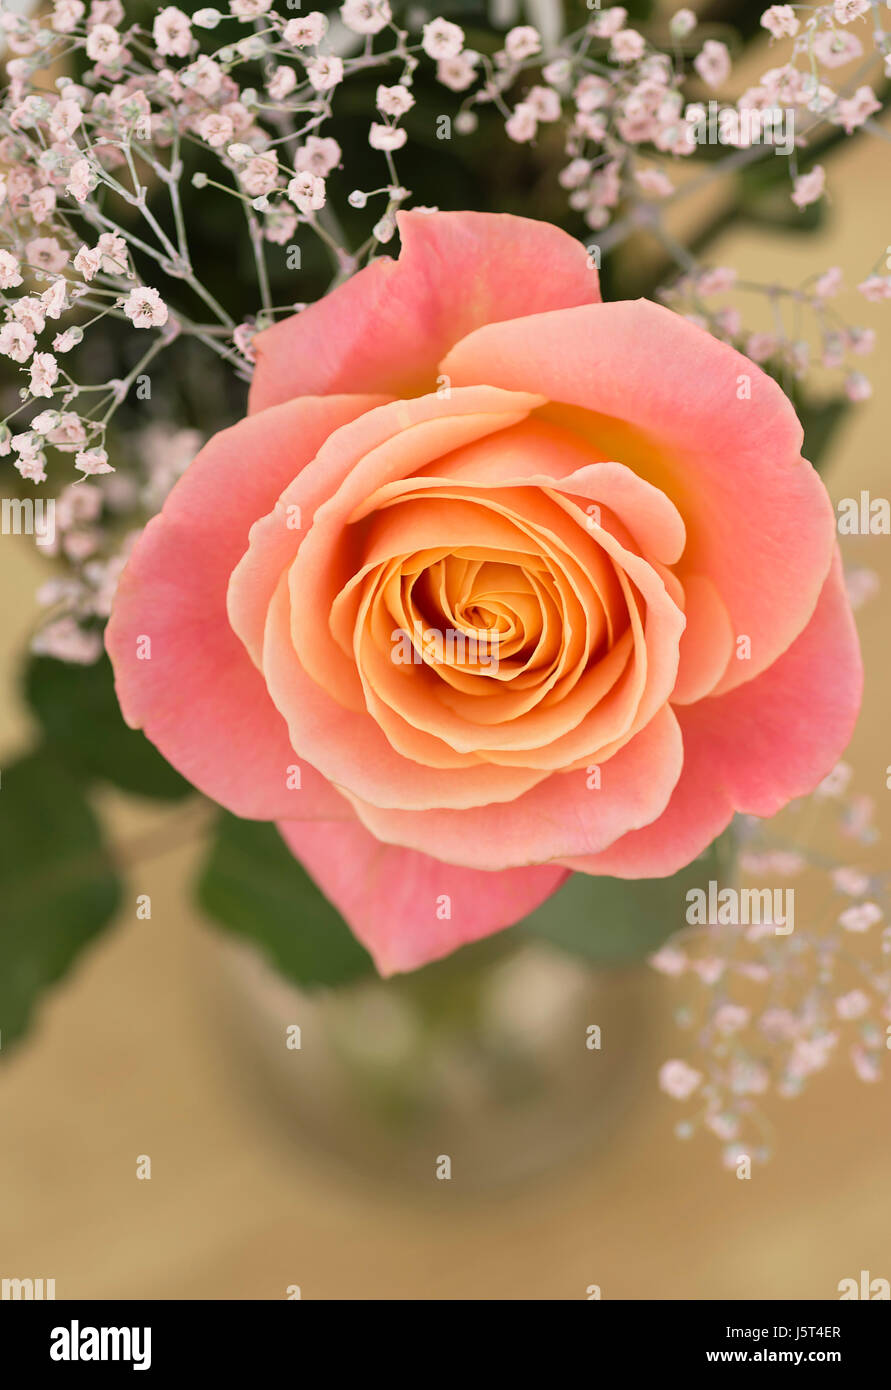 Rosa durazno solo fotografías e imágenes de alta resolución - Alamy